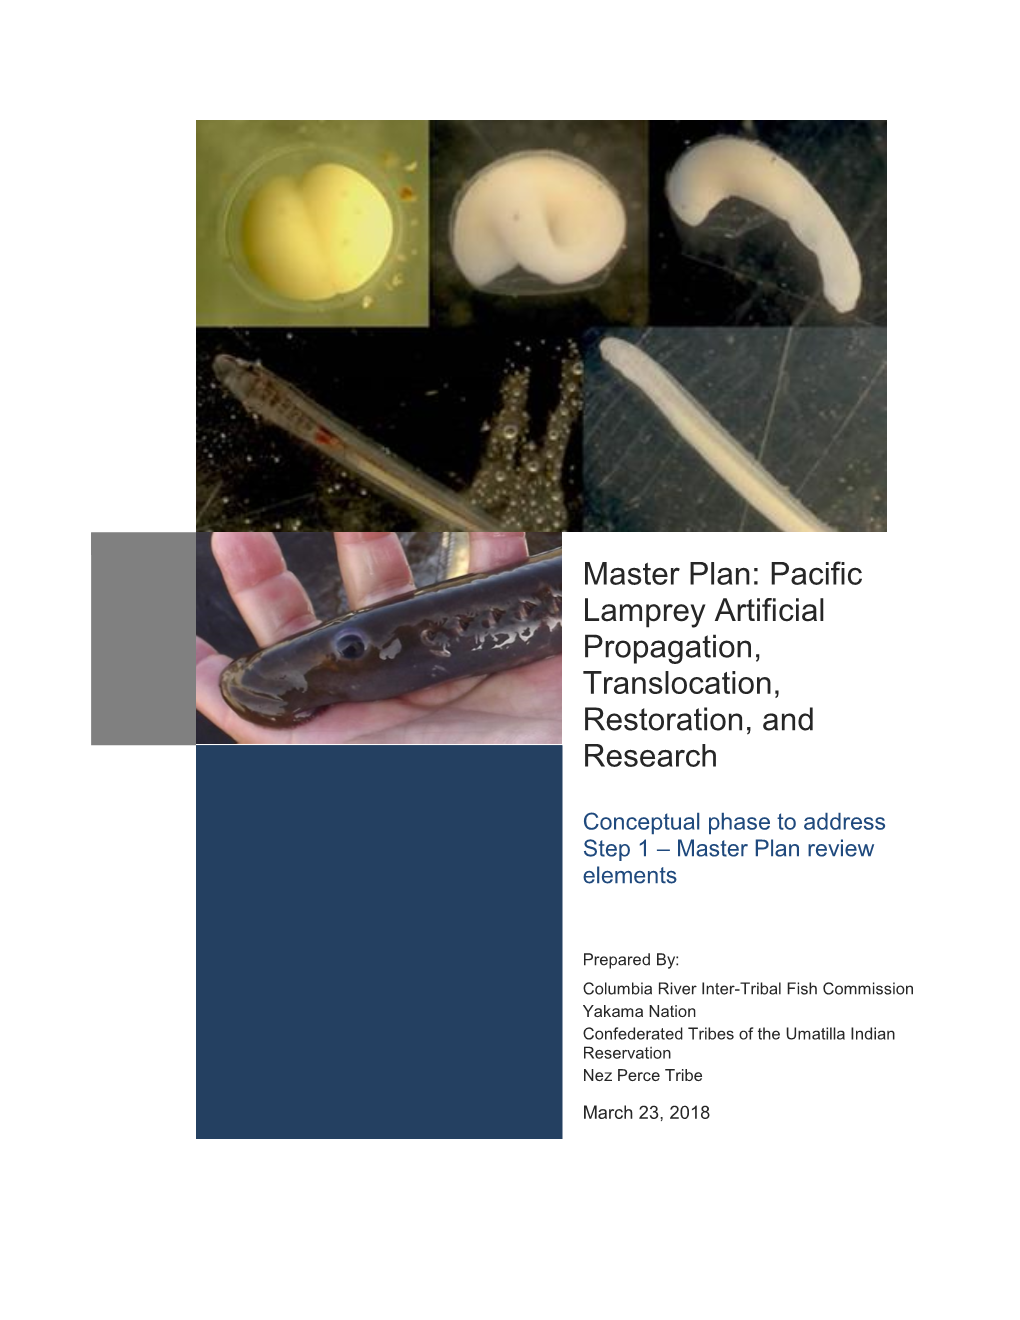 Master Plan: Pacific Lamprey Artificial Propagation, Translocation, Restoration, And